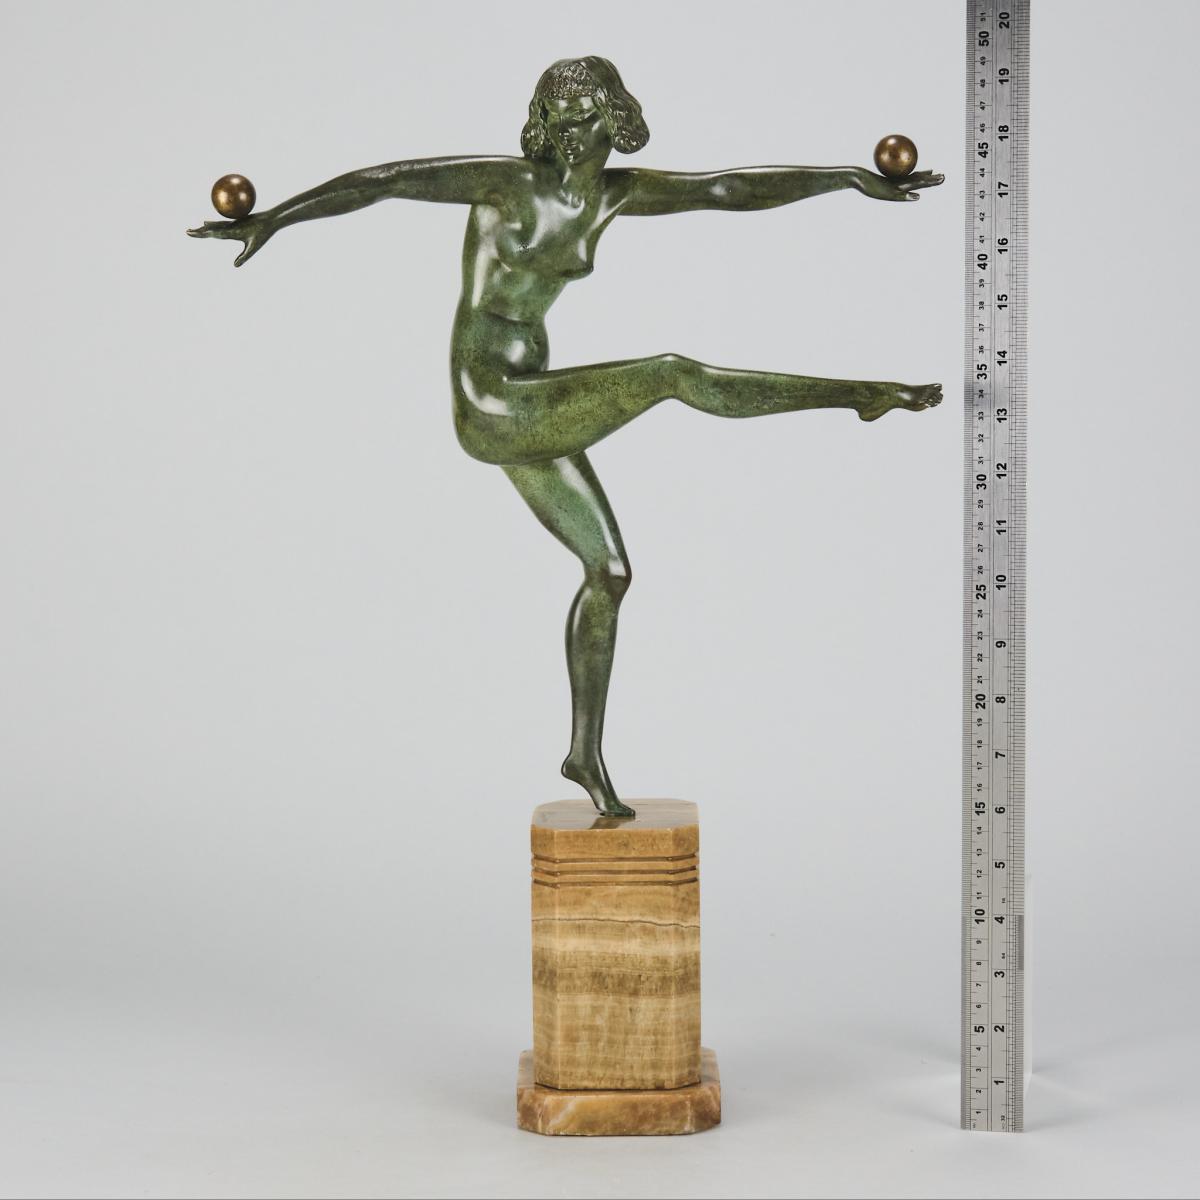 Art Deco Sculpture entitled "Balancing" by Marcel Bouraine - Circa 1930